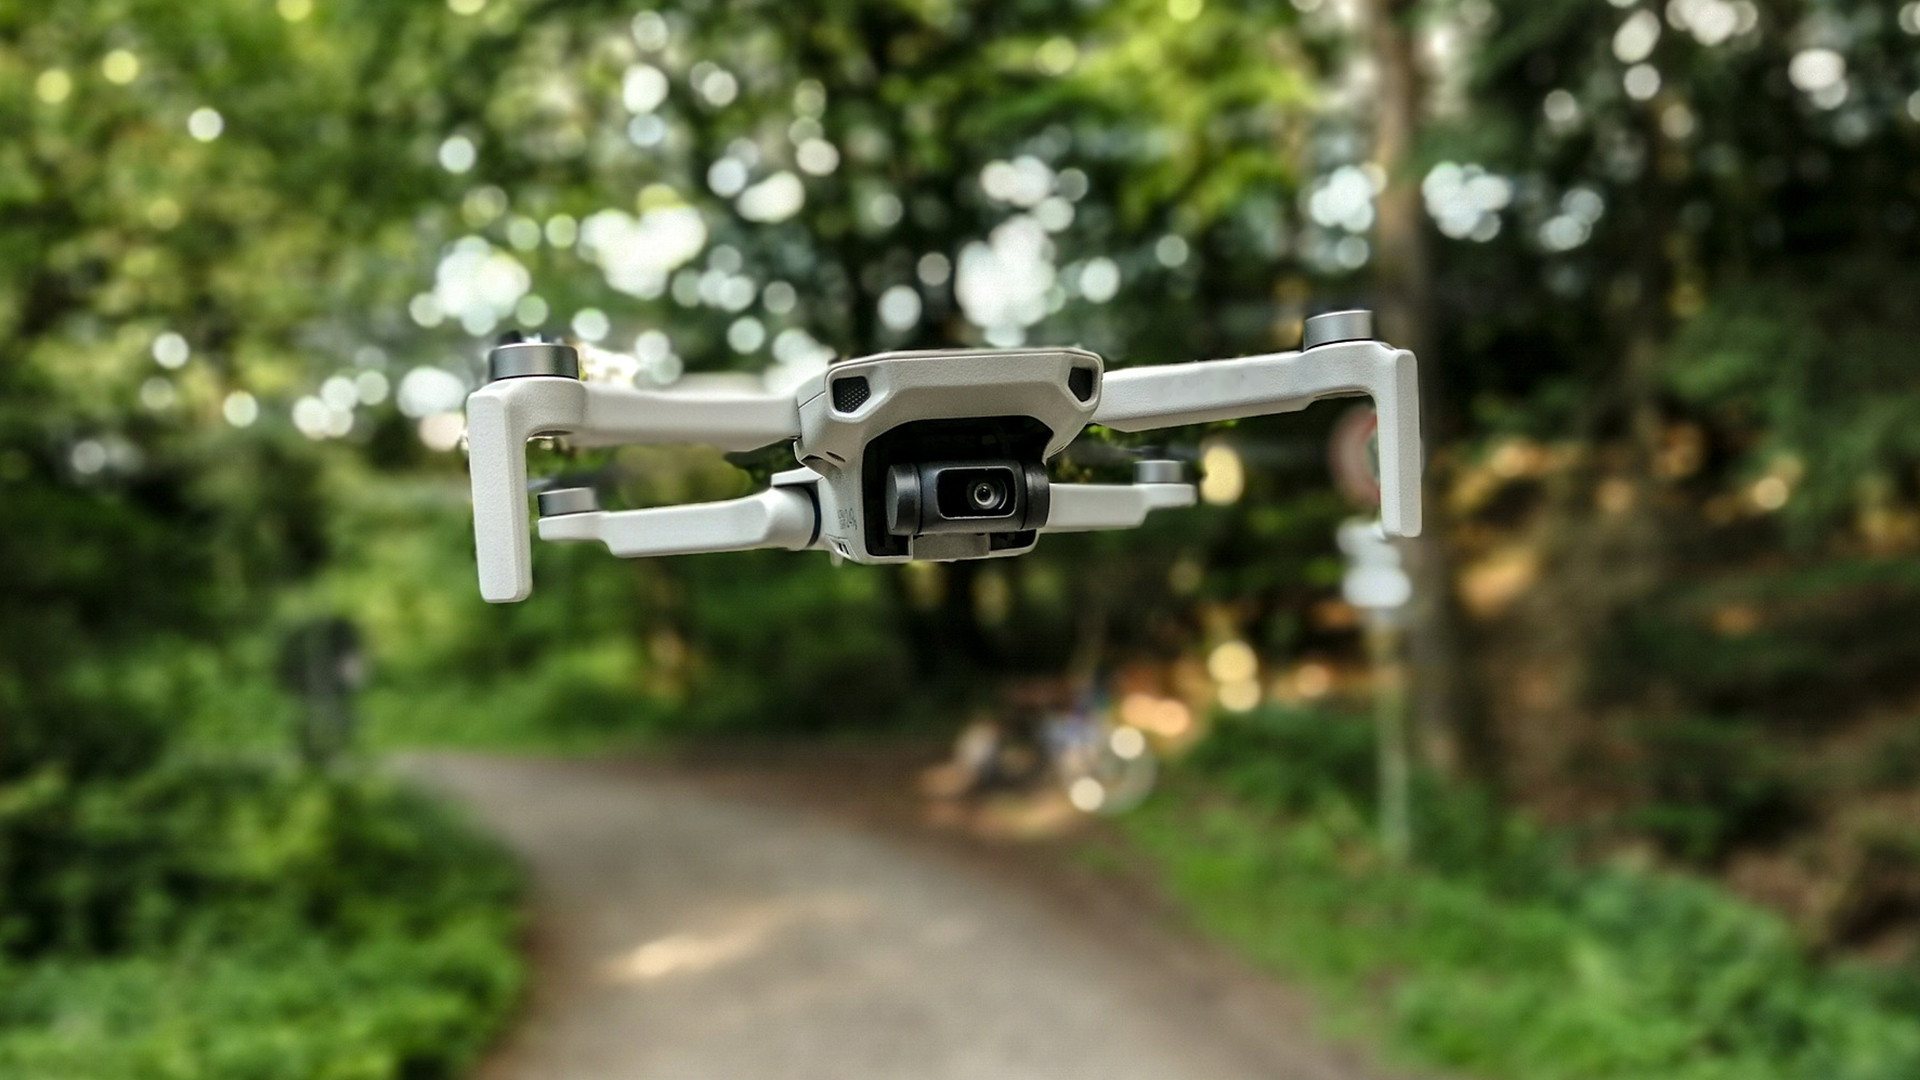 DJI Mavic – Drones for Everyone